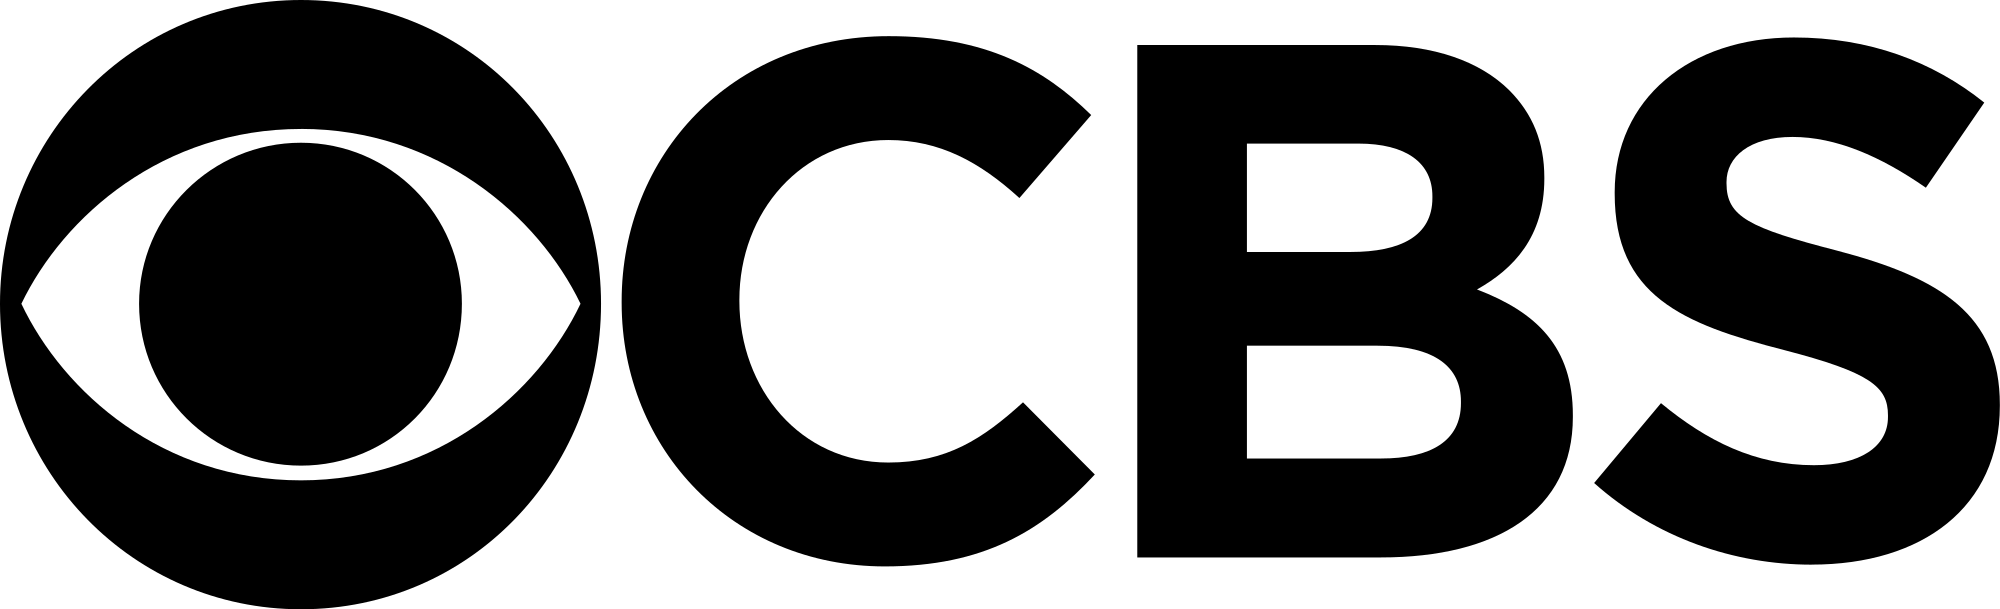 2000px-CBS_logo.svg.png